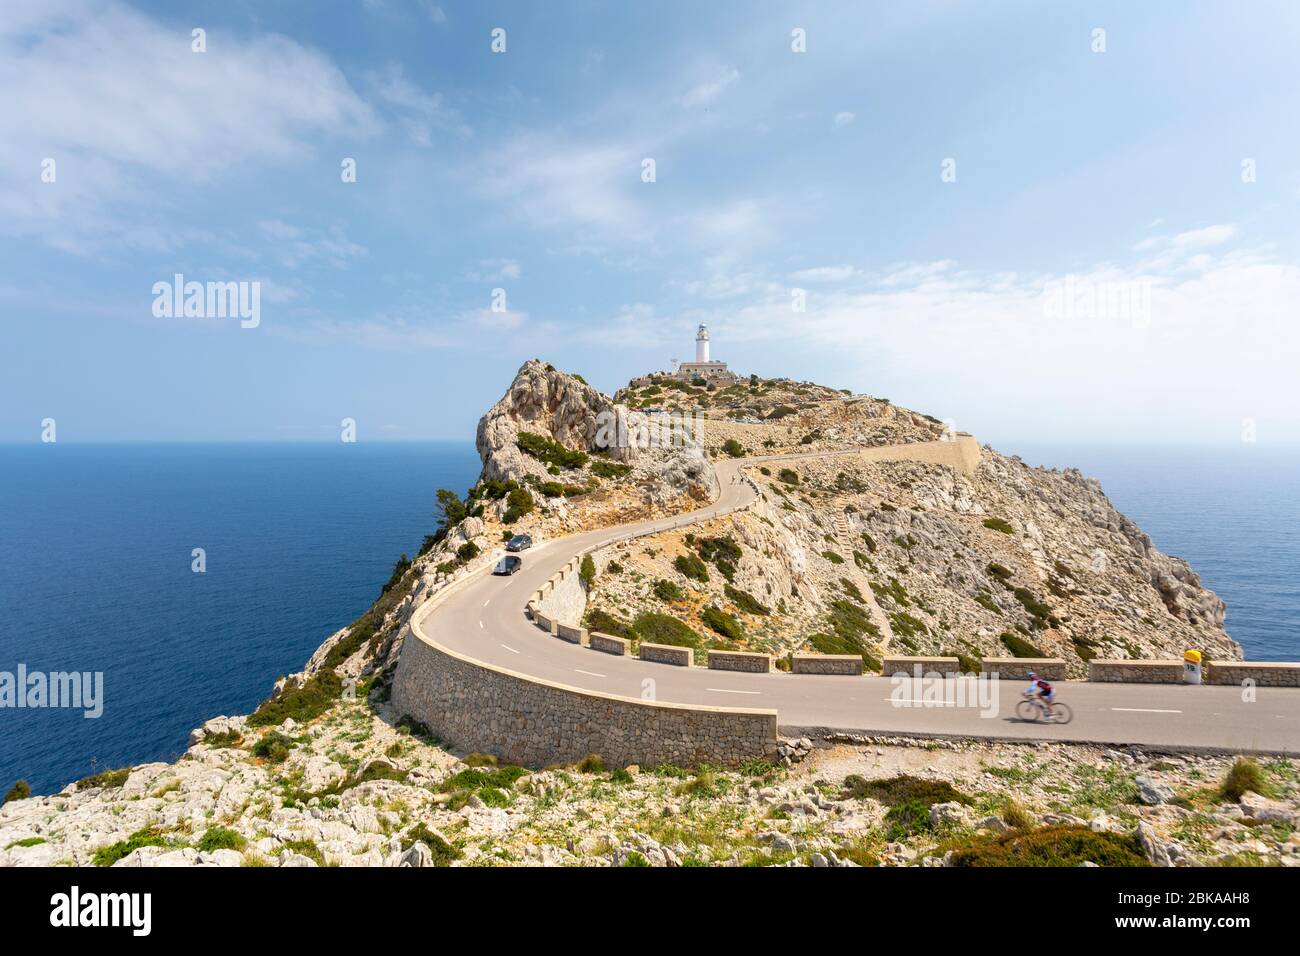 A cyclist on a road heading towards a lighthouse at the tip of Cap de Formentor, Mallorca, Spain Stock Photo